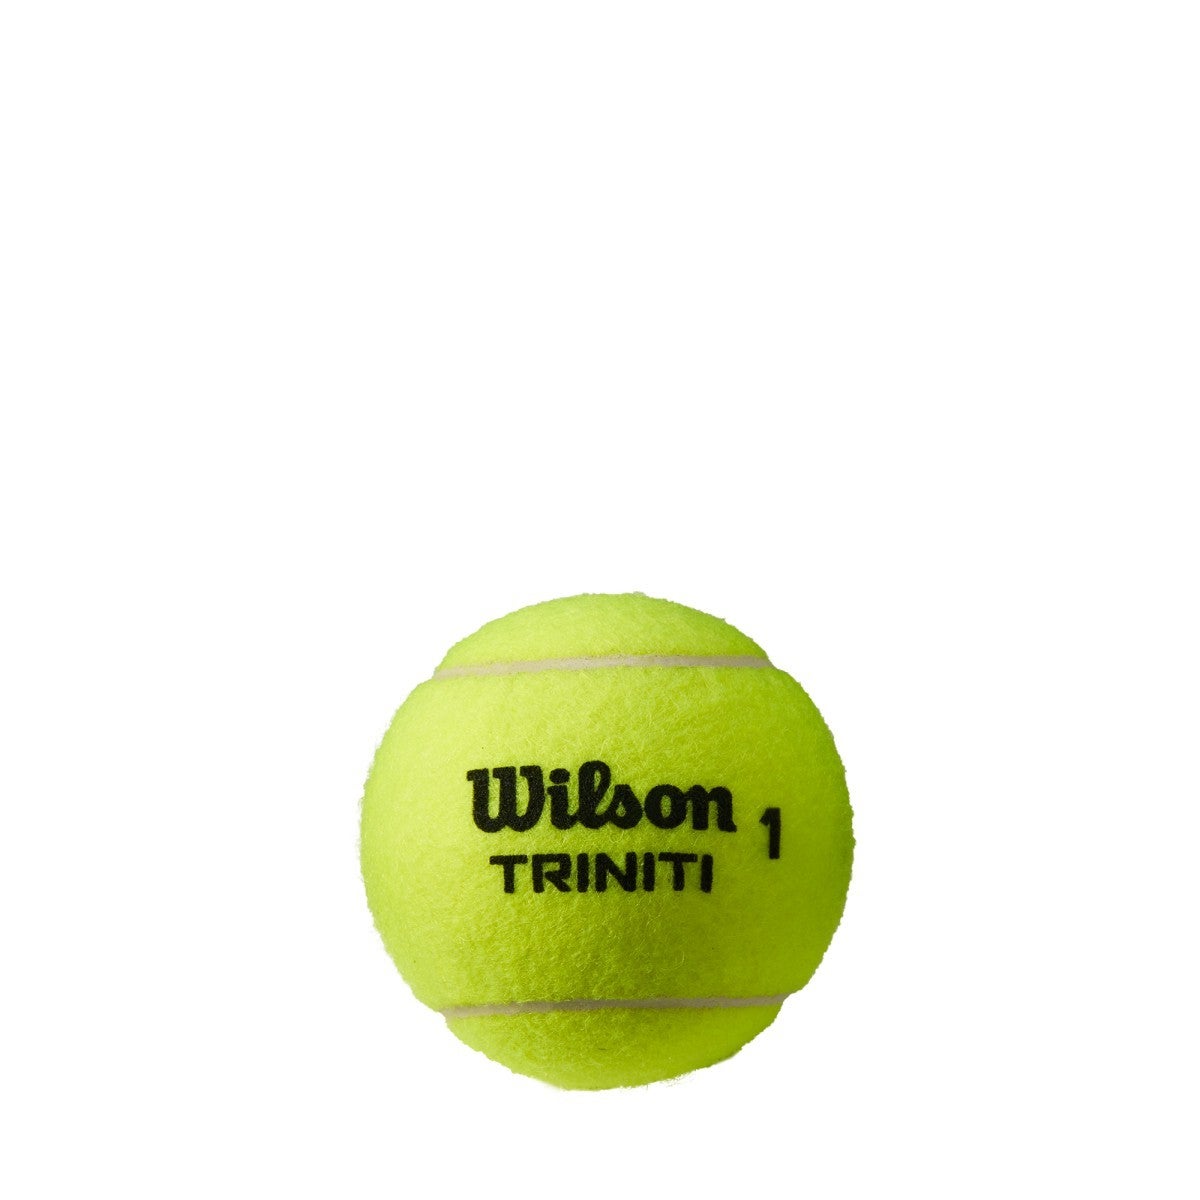 Wilson Triniti Tennis Ball - 4 Ball Sleeve